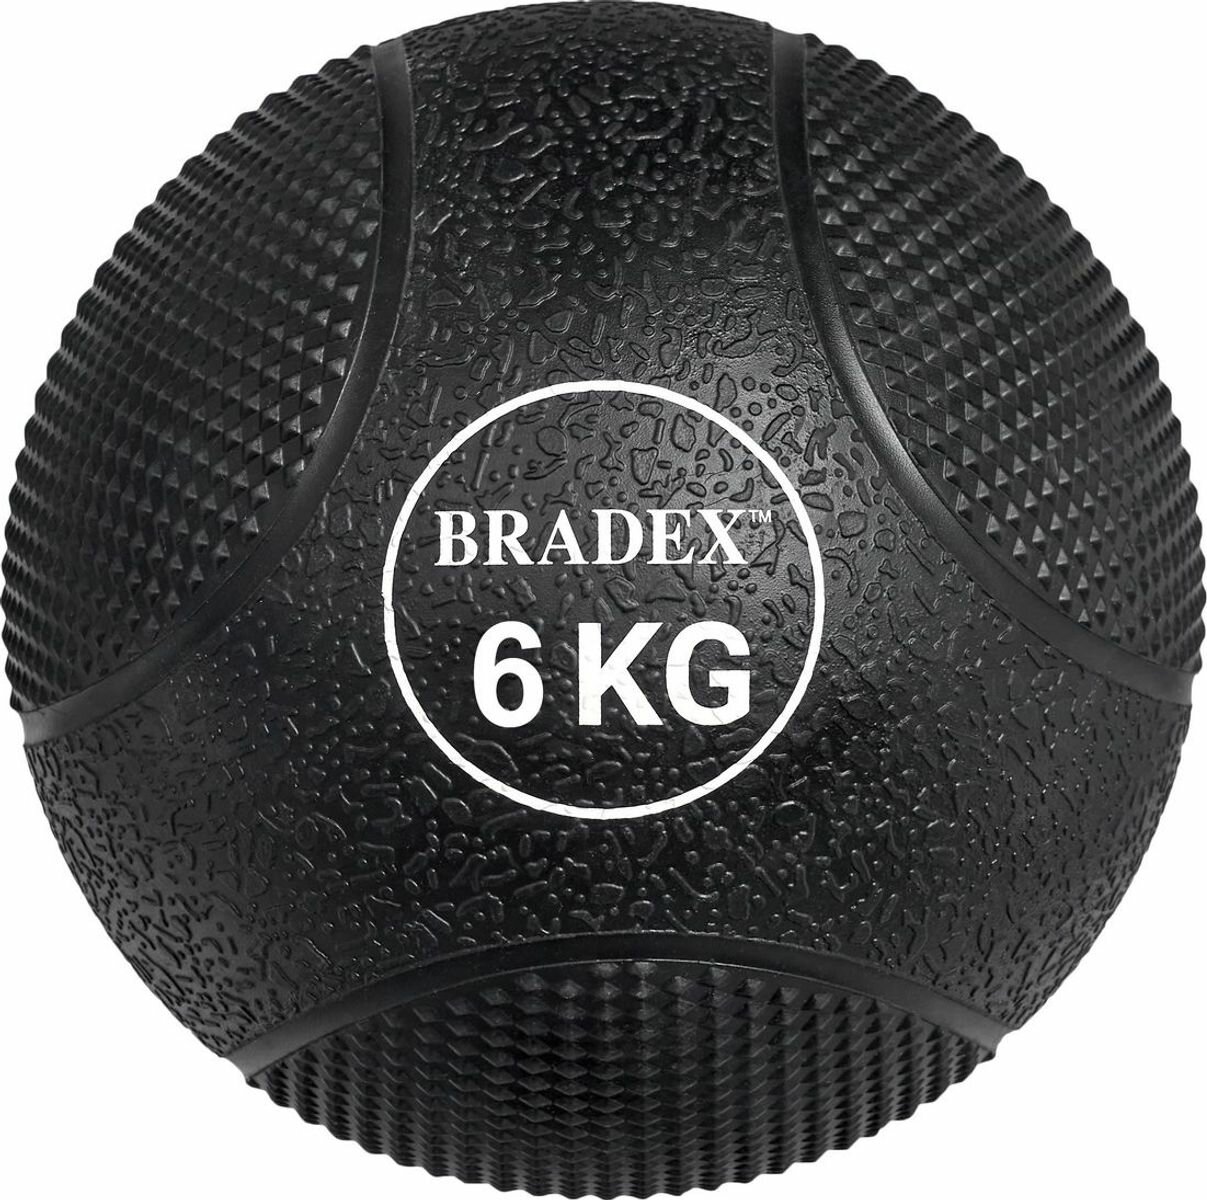 BRADEX Медбол резиновый, Bradex SF 0775, 6кг, BRADEX